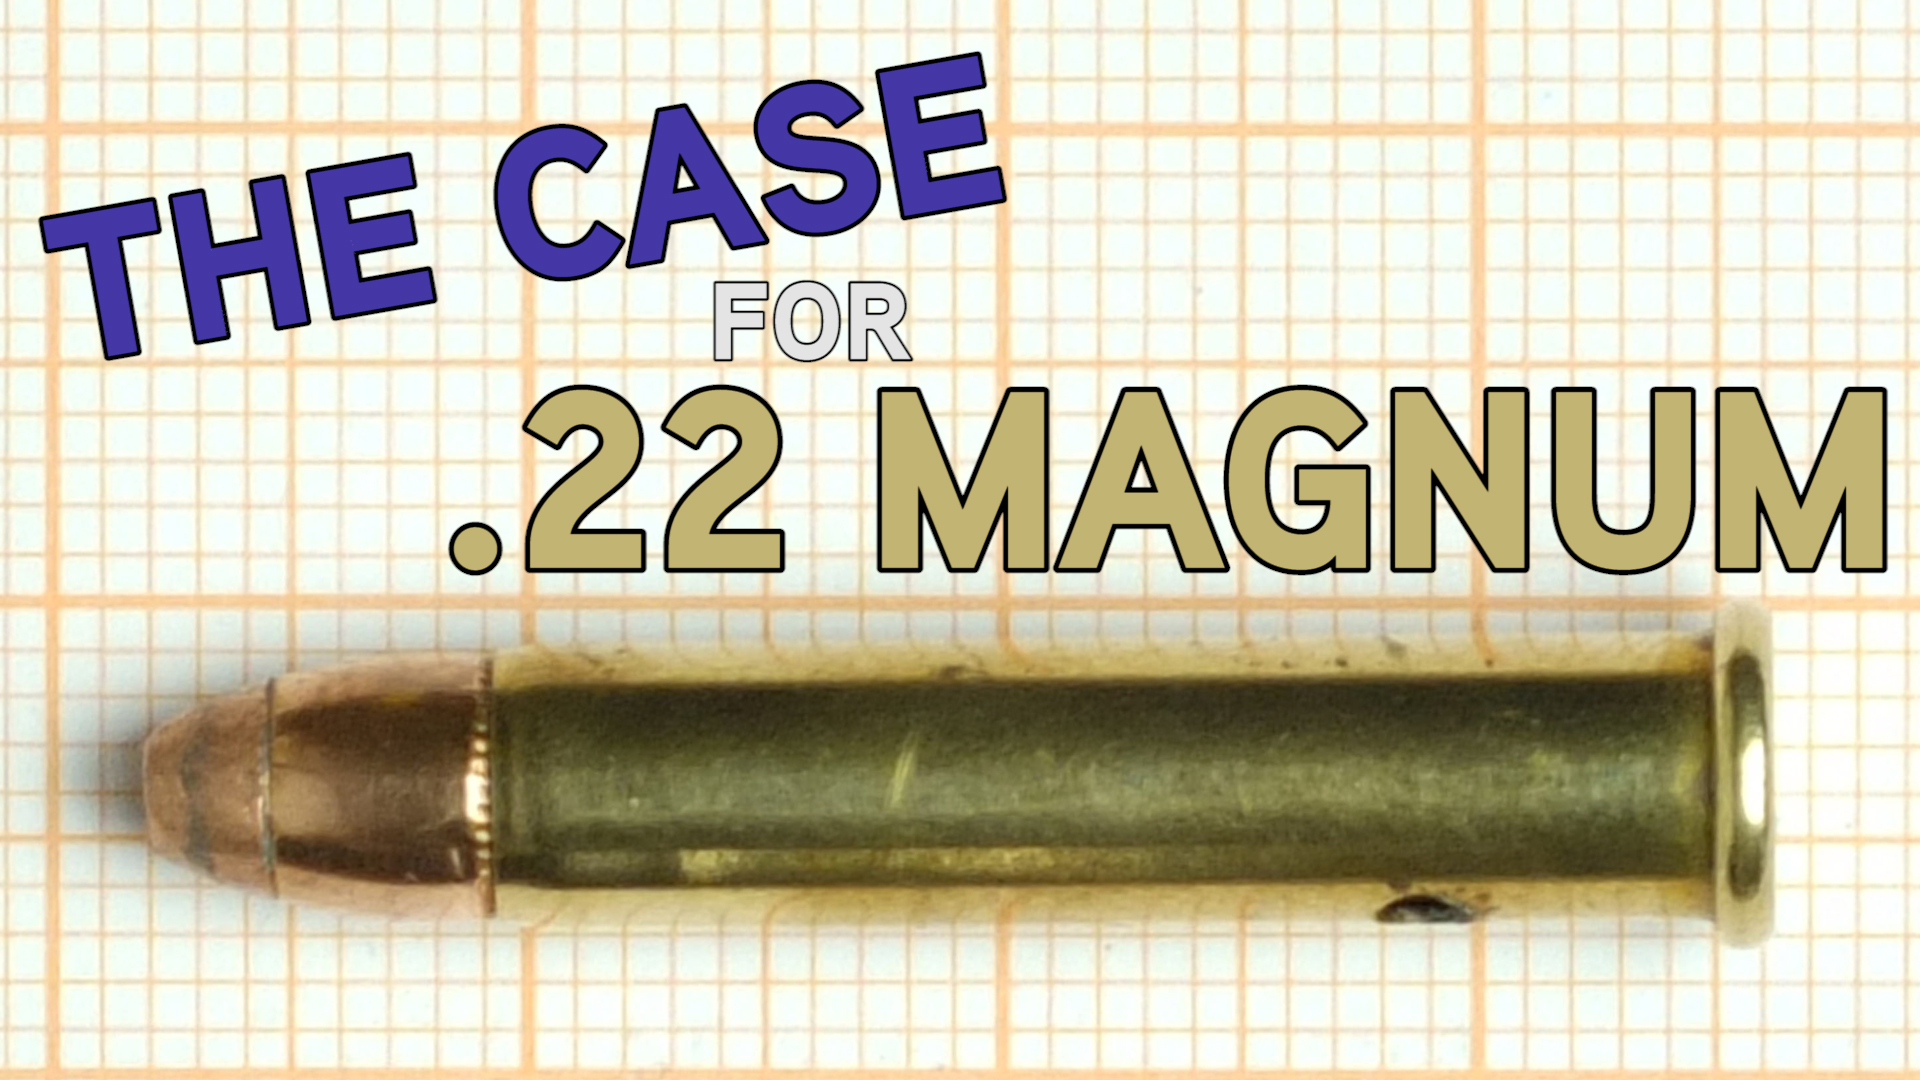 .22 magnum ammunition